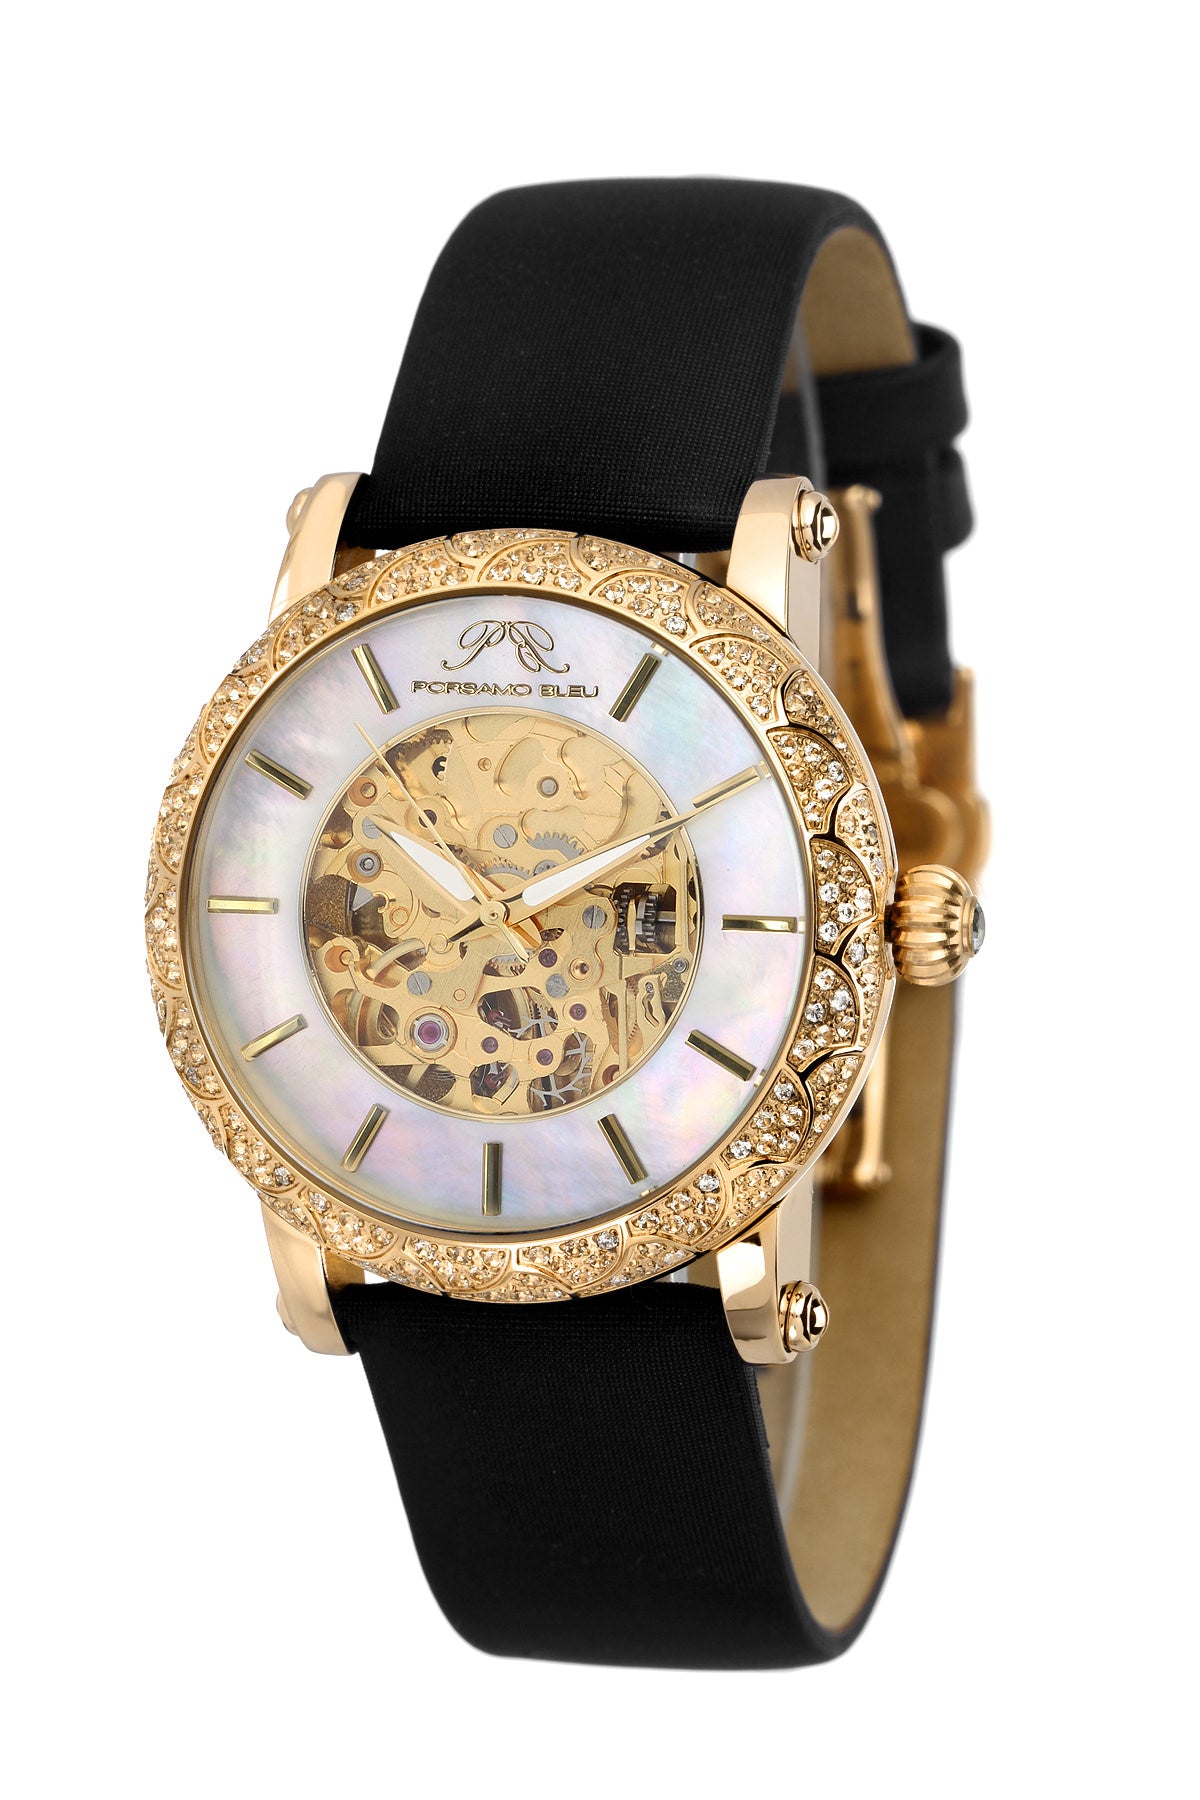 Porsamo Bleu Liza Luxury Automatic Topaz Women's Satin Leather Watch, Gold, Black 691BLIL